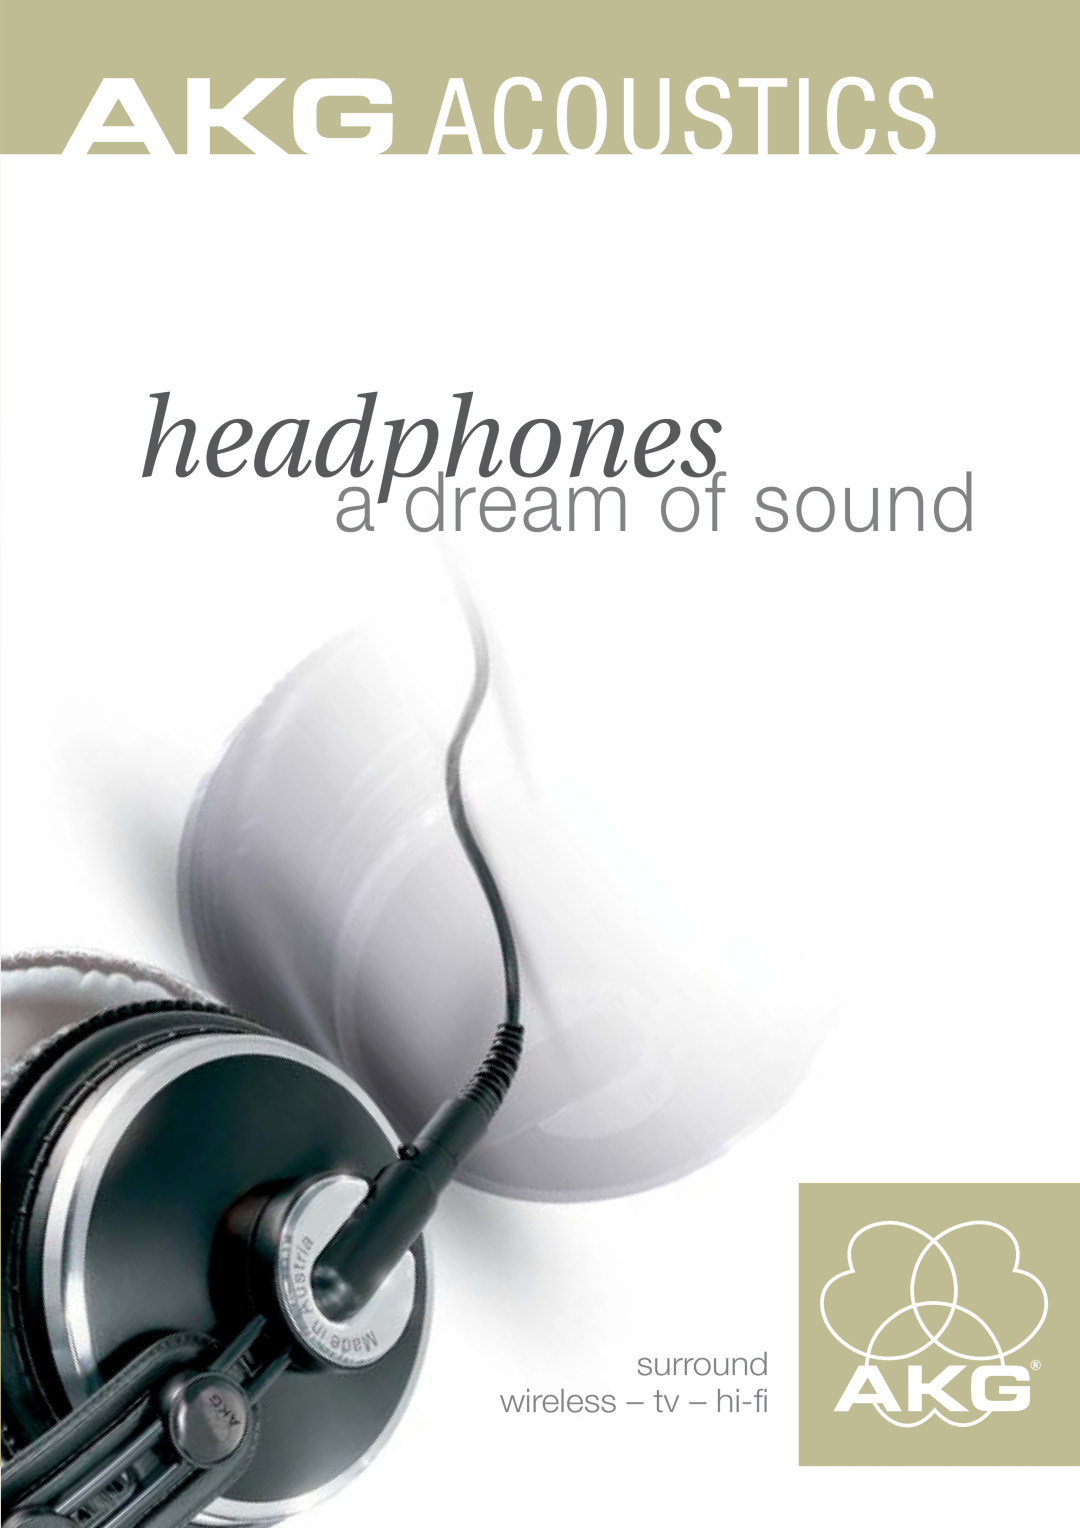 AKG Acoustics surround headphones manual a dream of sound, surround wireless - tv - hi-fi 